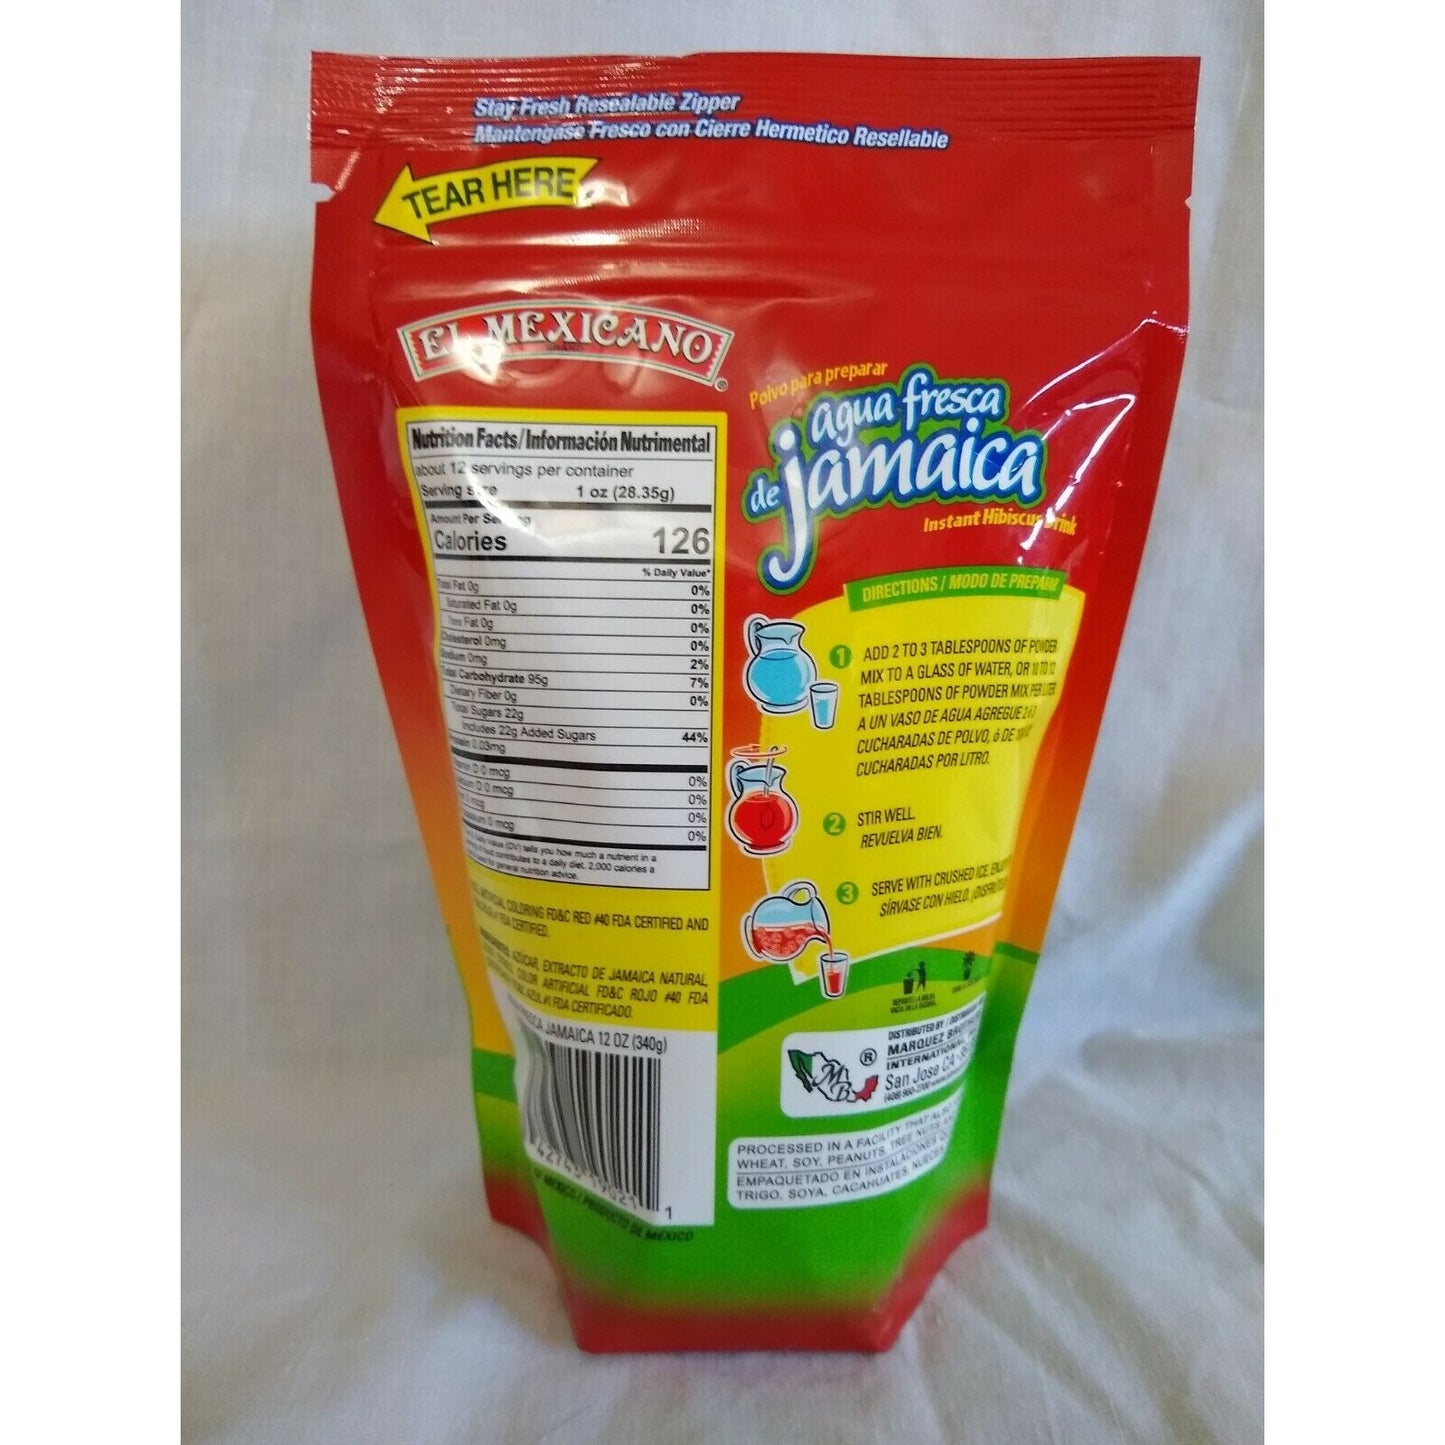 El Mexicano Agua Fresca de Jamaica Drink Mix 12 Ounce Package